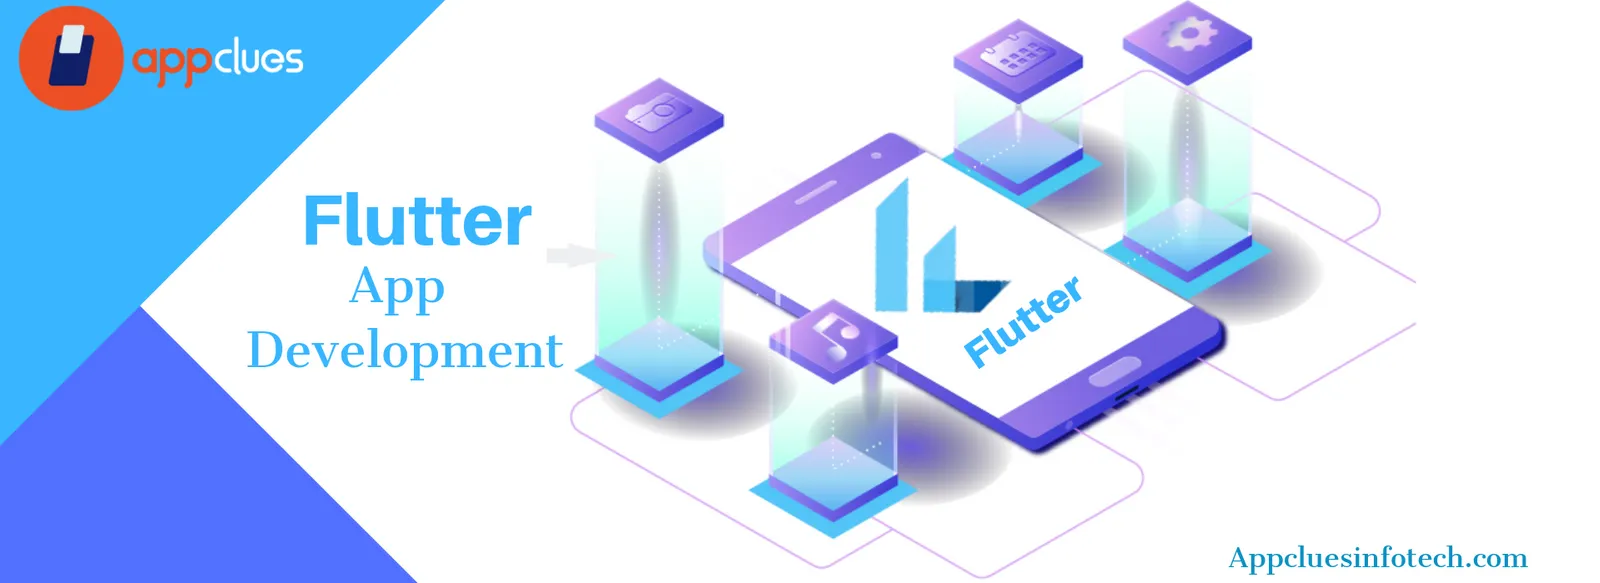 Best Flutter App Development Company in USA & India